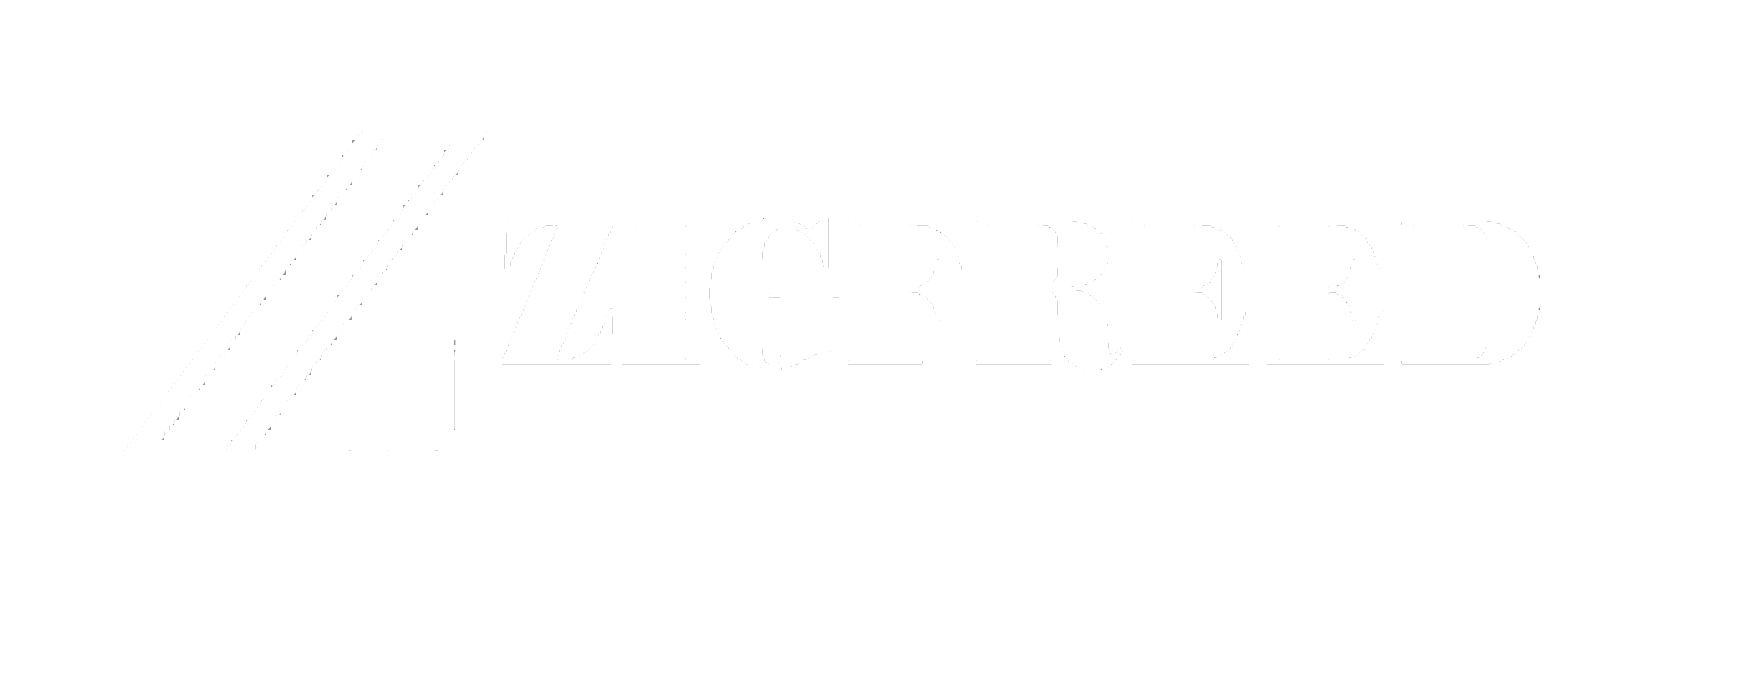 Zigfreed TV